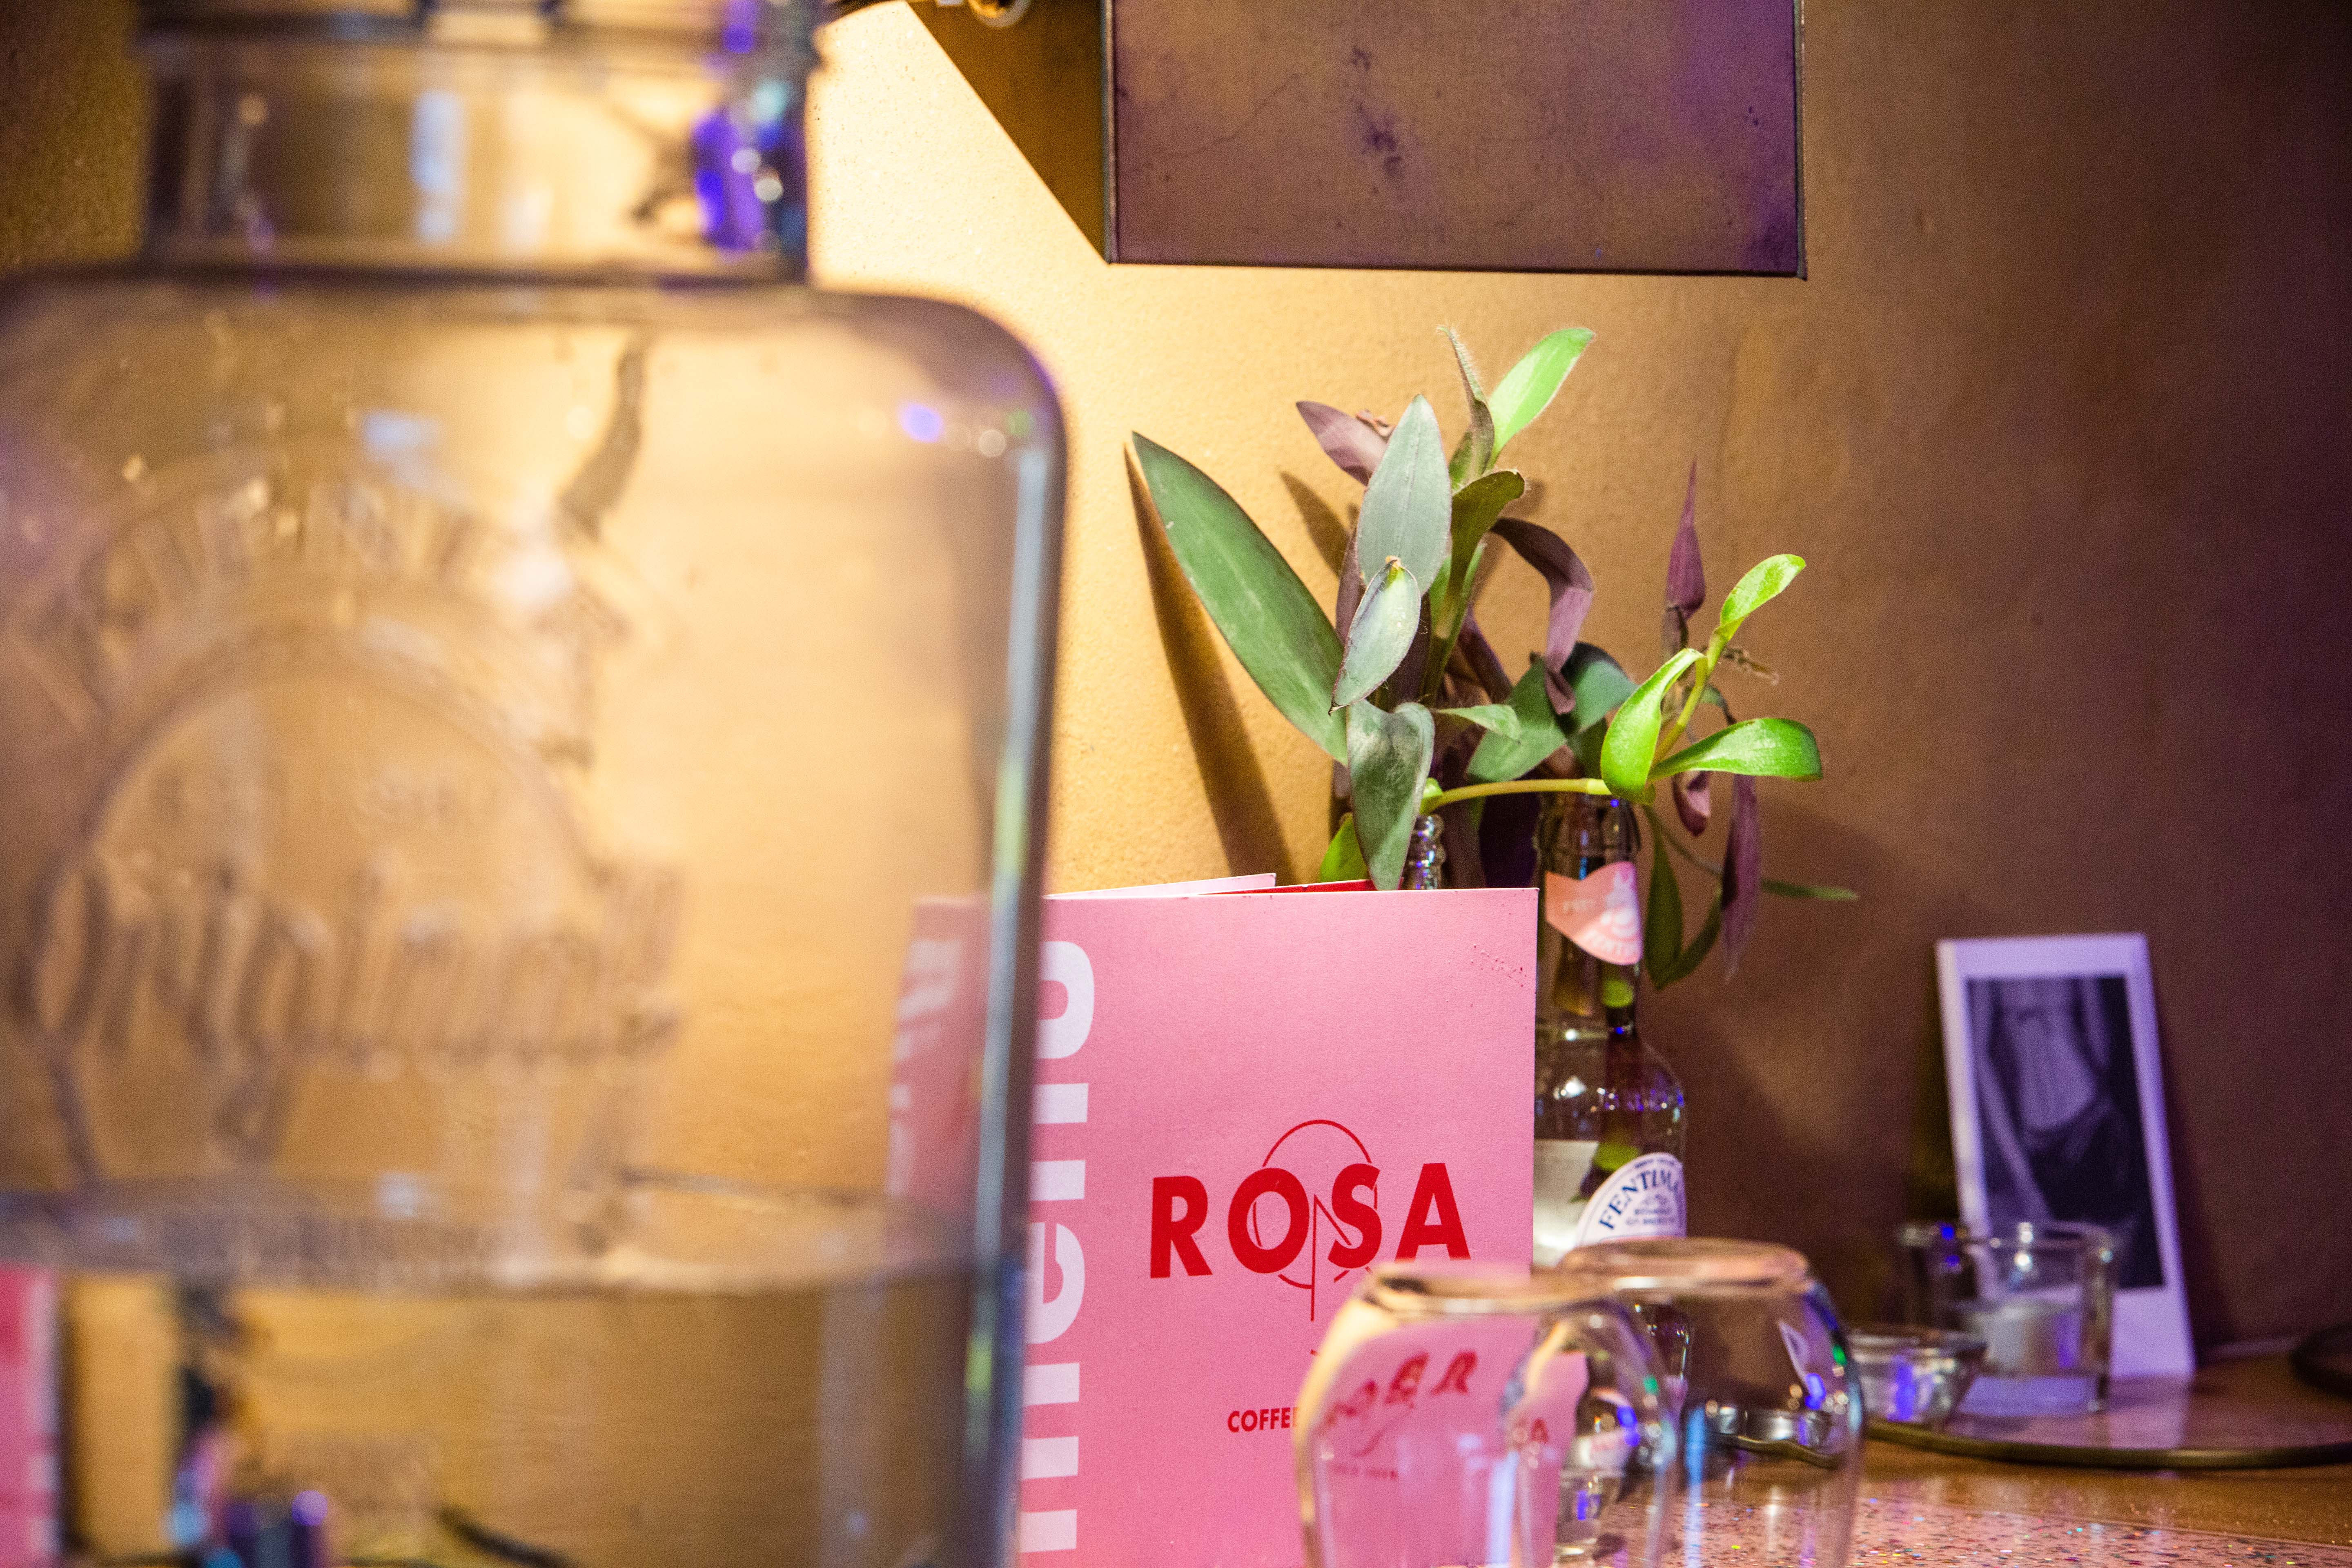 ROSA coffee bar Gent menu display behind glass